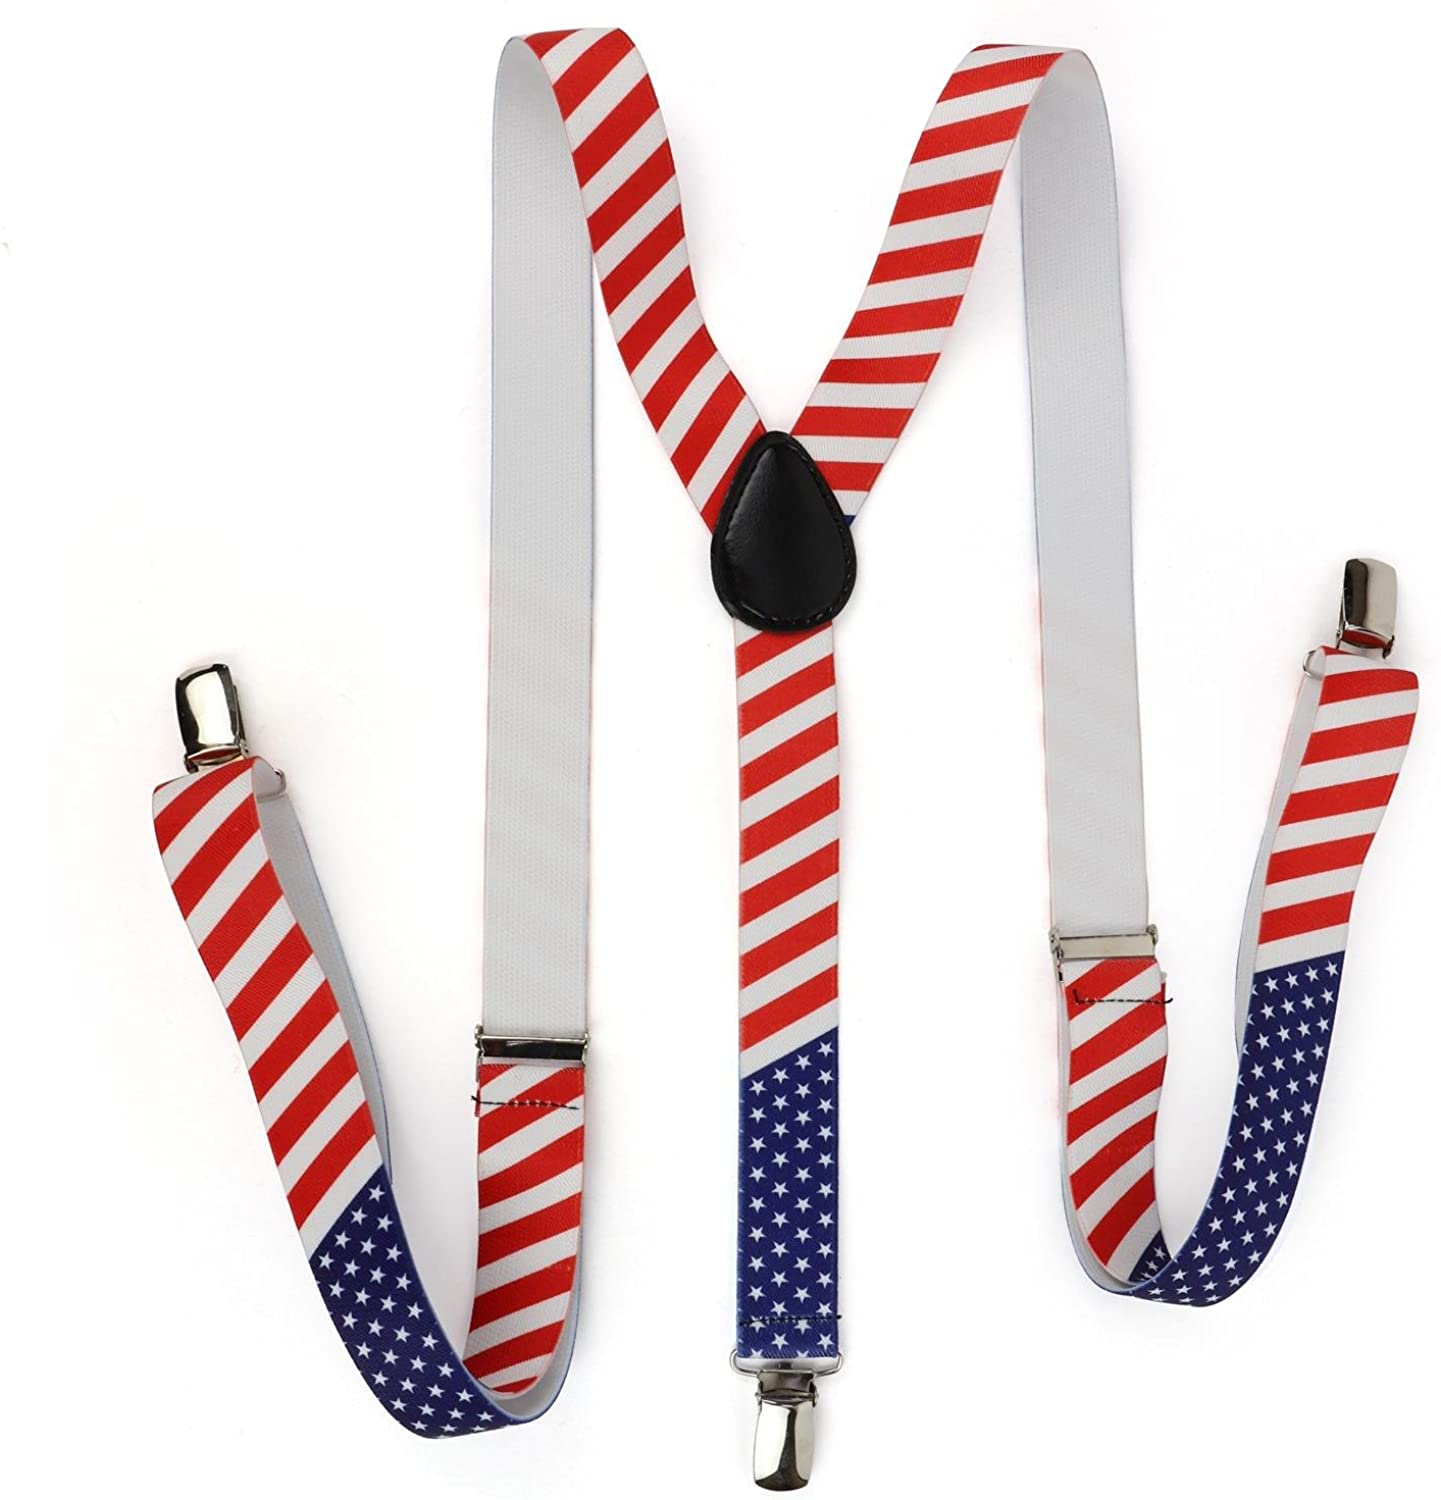 Armycrew US American Flag Print Clip On Patriotic Suspenders